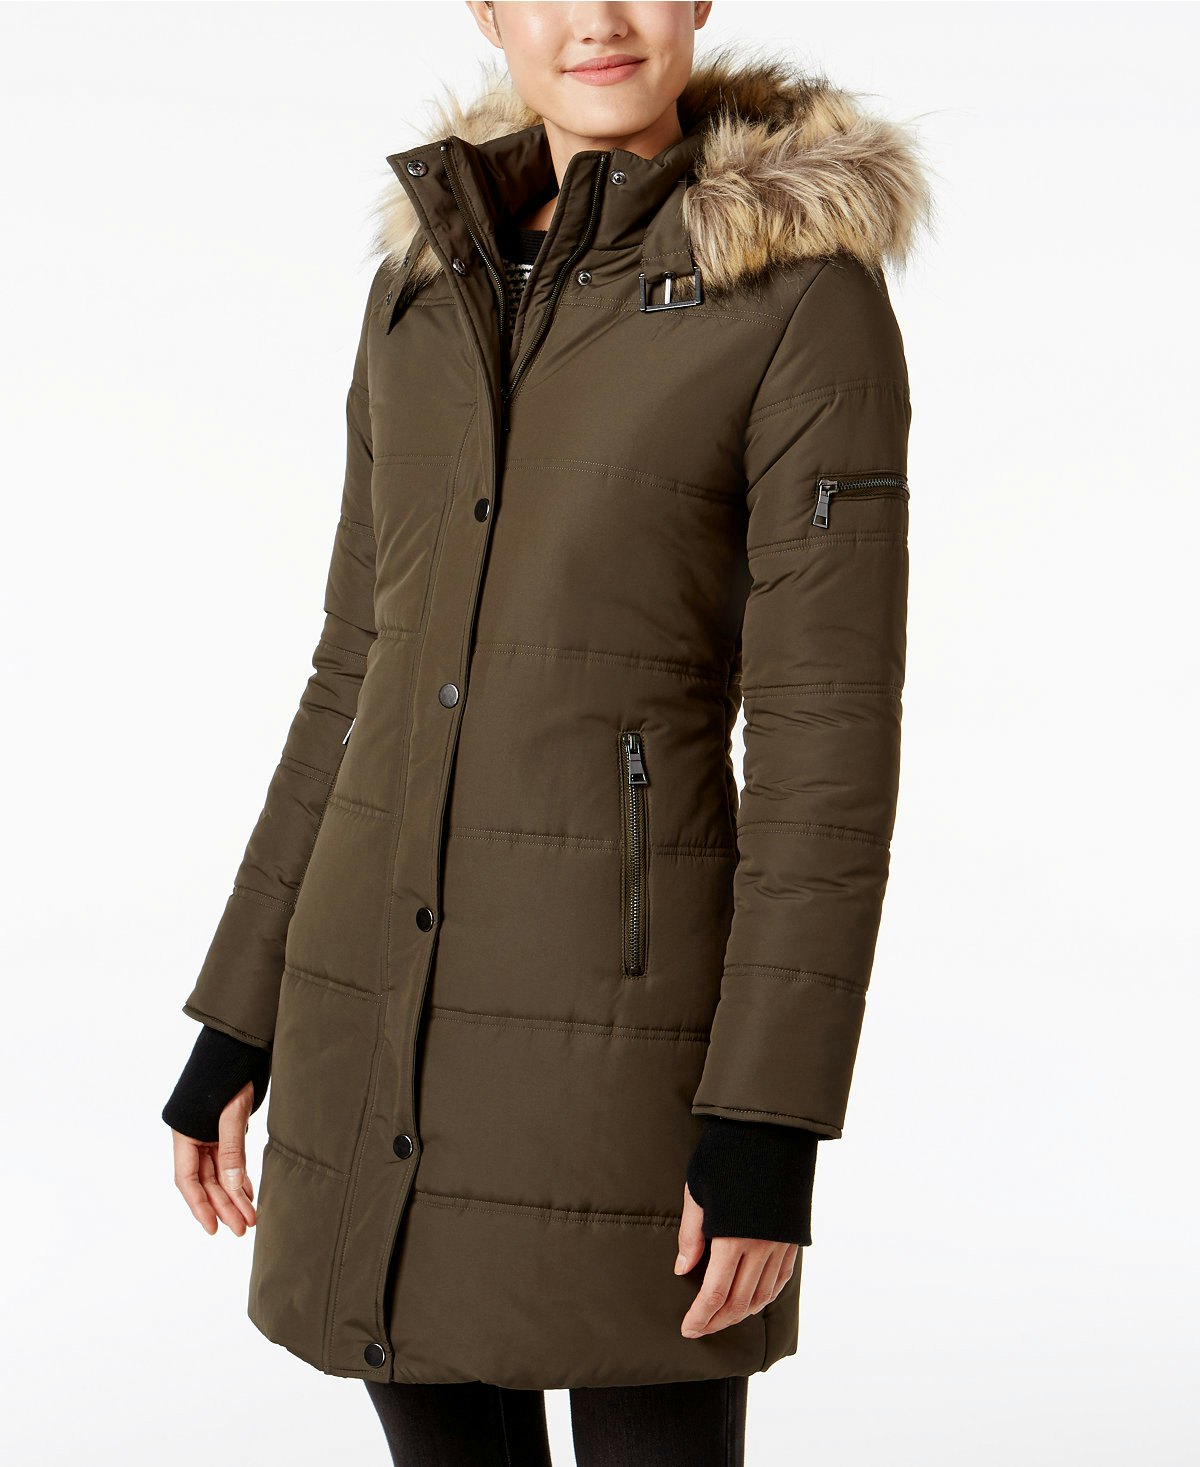 15 Warm Winter Coats Under $100 That 